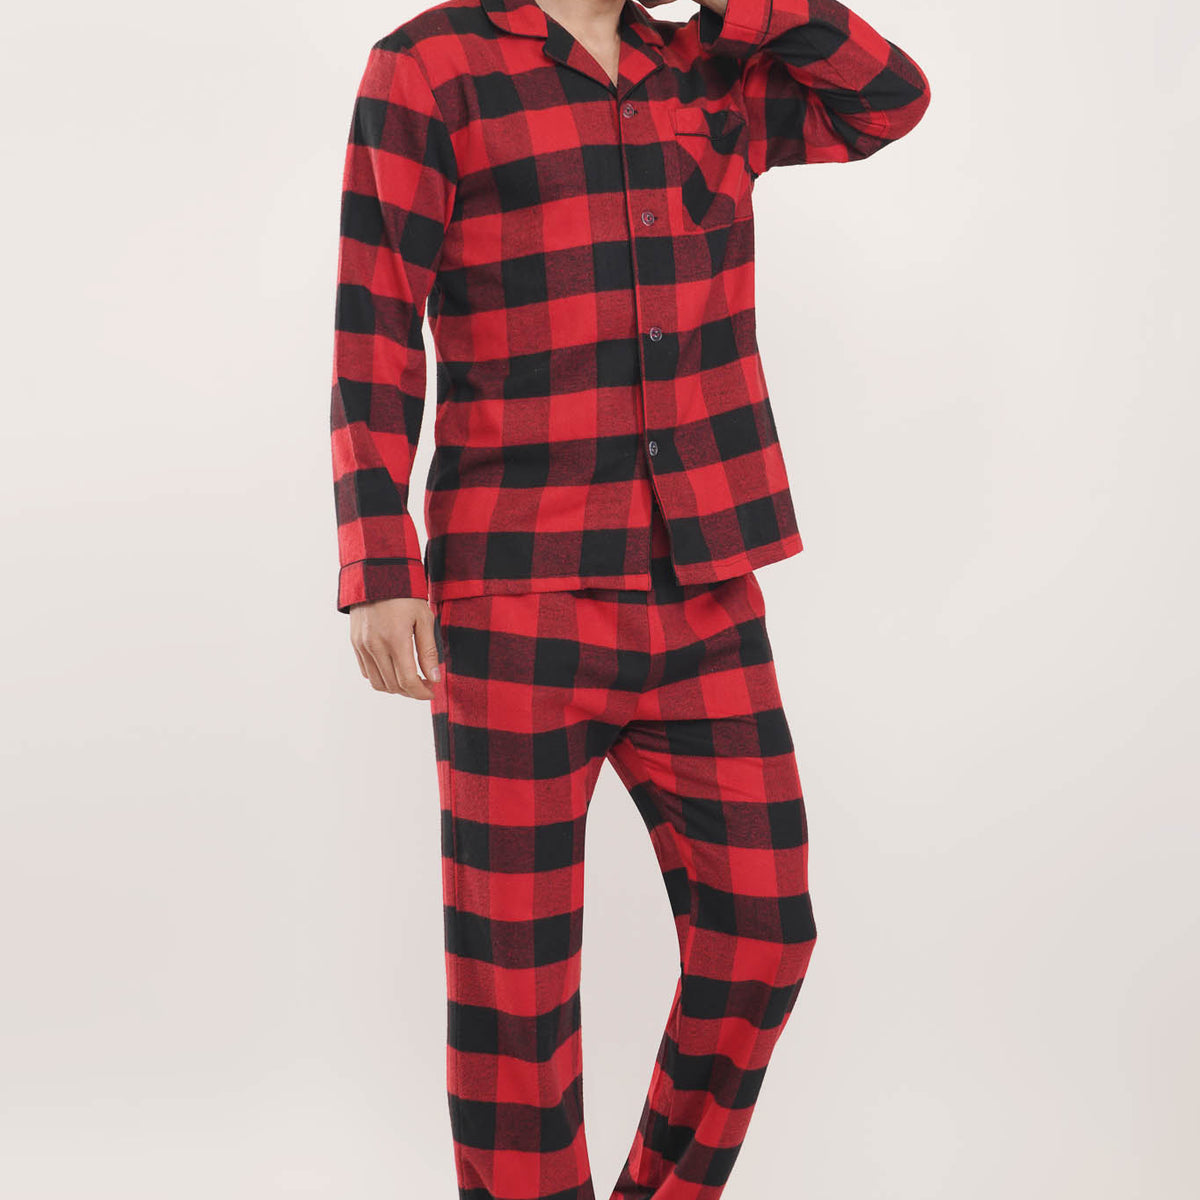 Wunderlove by Westside Red Plaid Checked Pyjamas